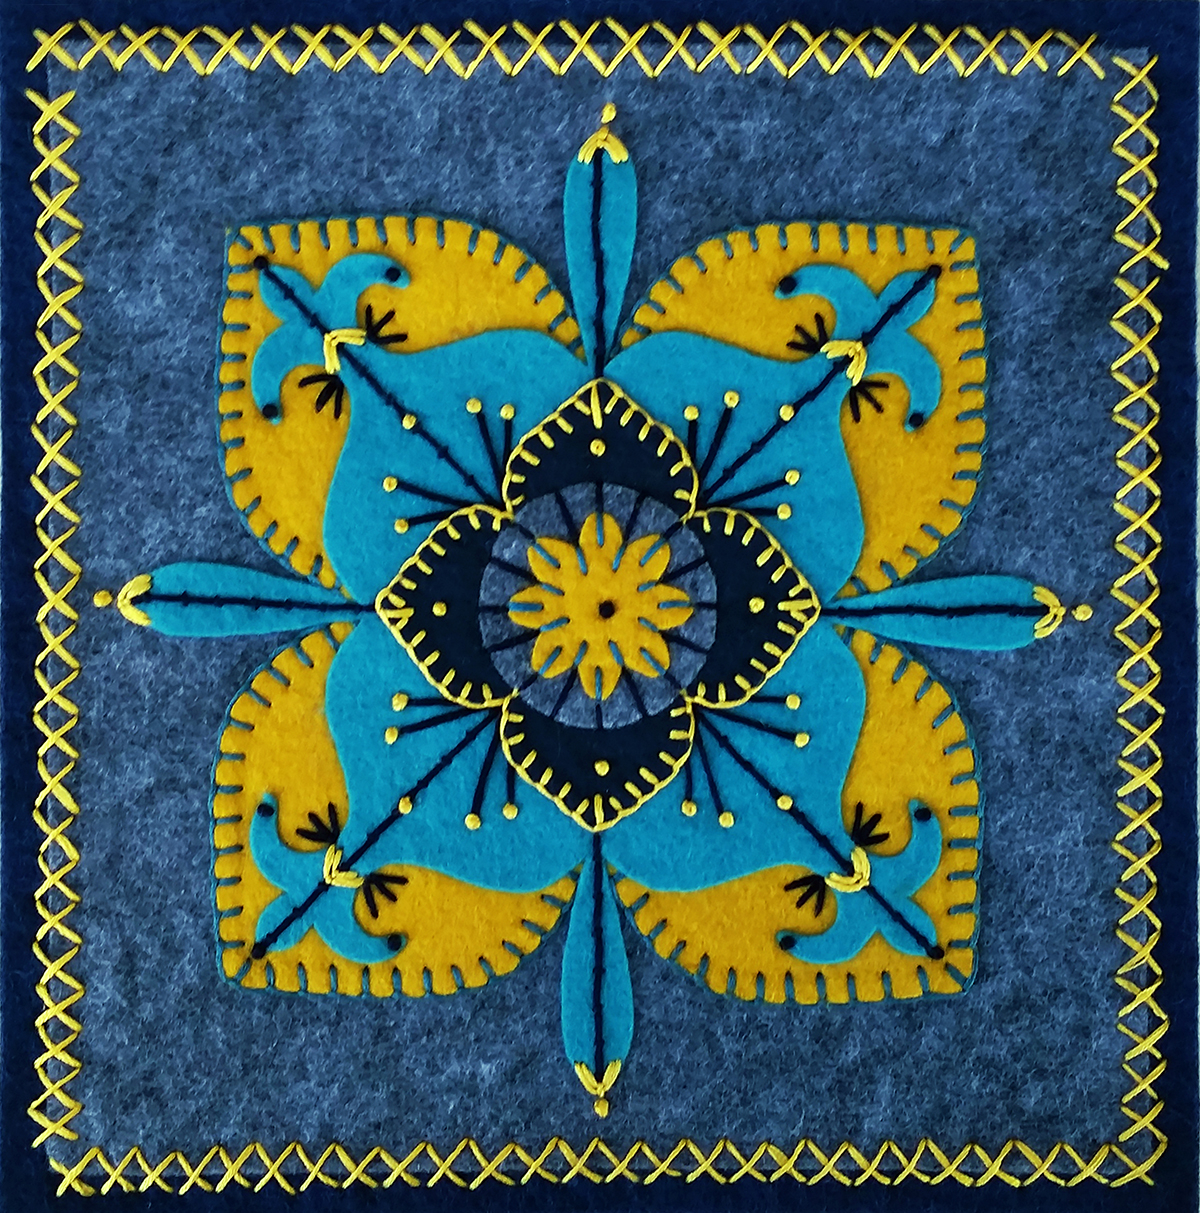 Felt Embroidery Patterns Patterns Kits For Embroidery On Wool Felt Kay Seurat